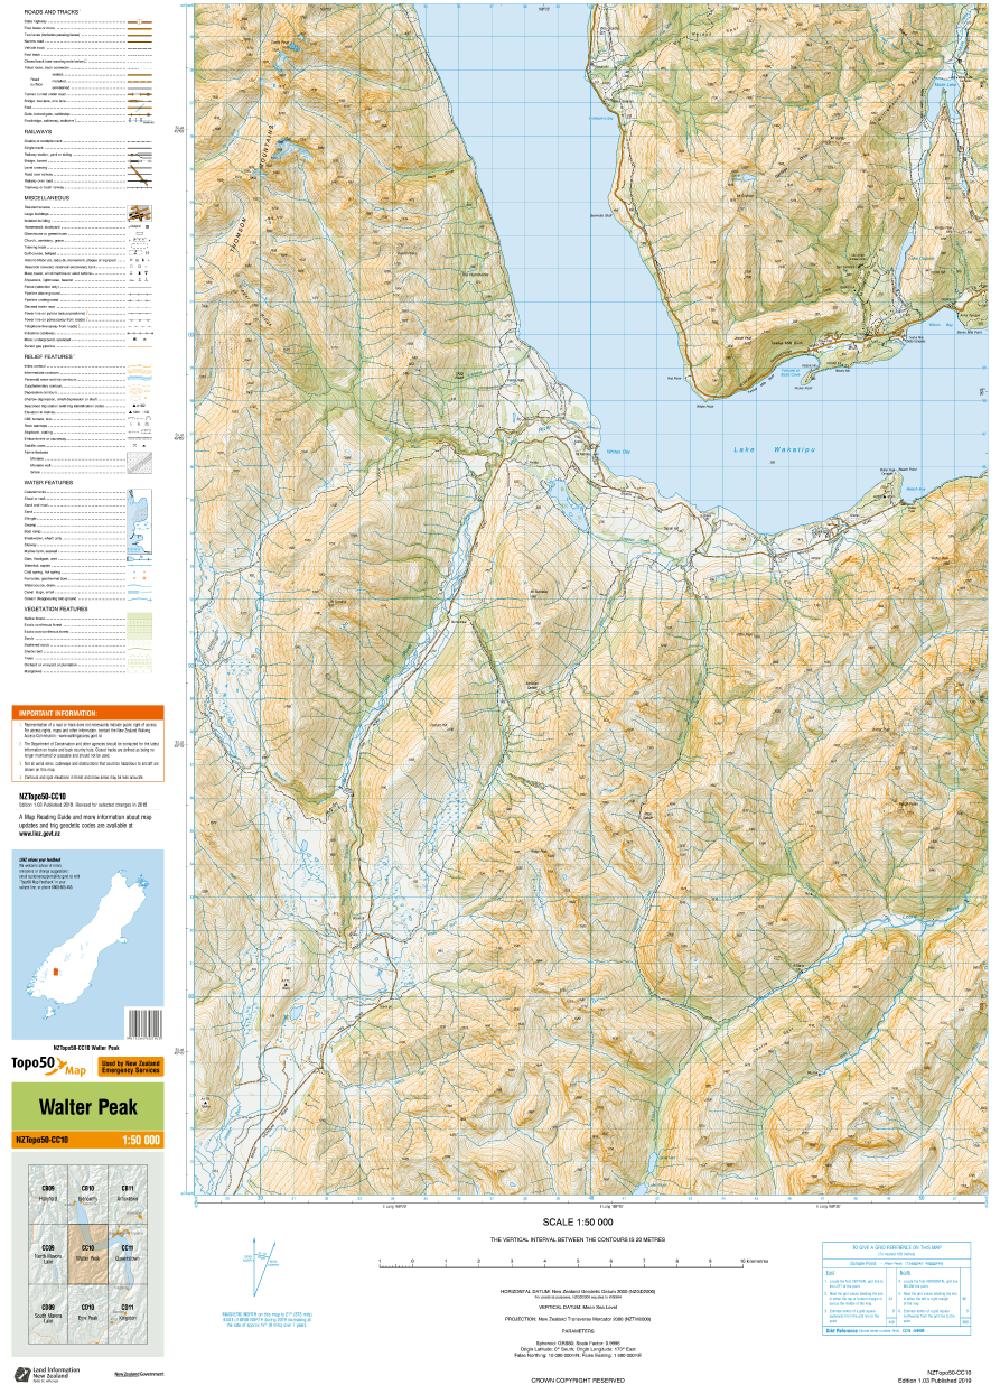 Topo map of Walter Peak